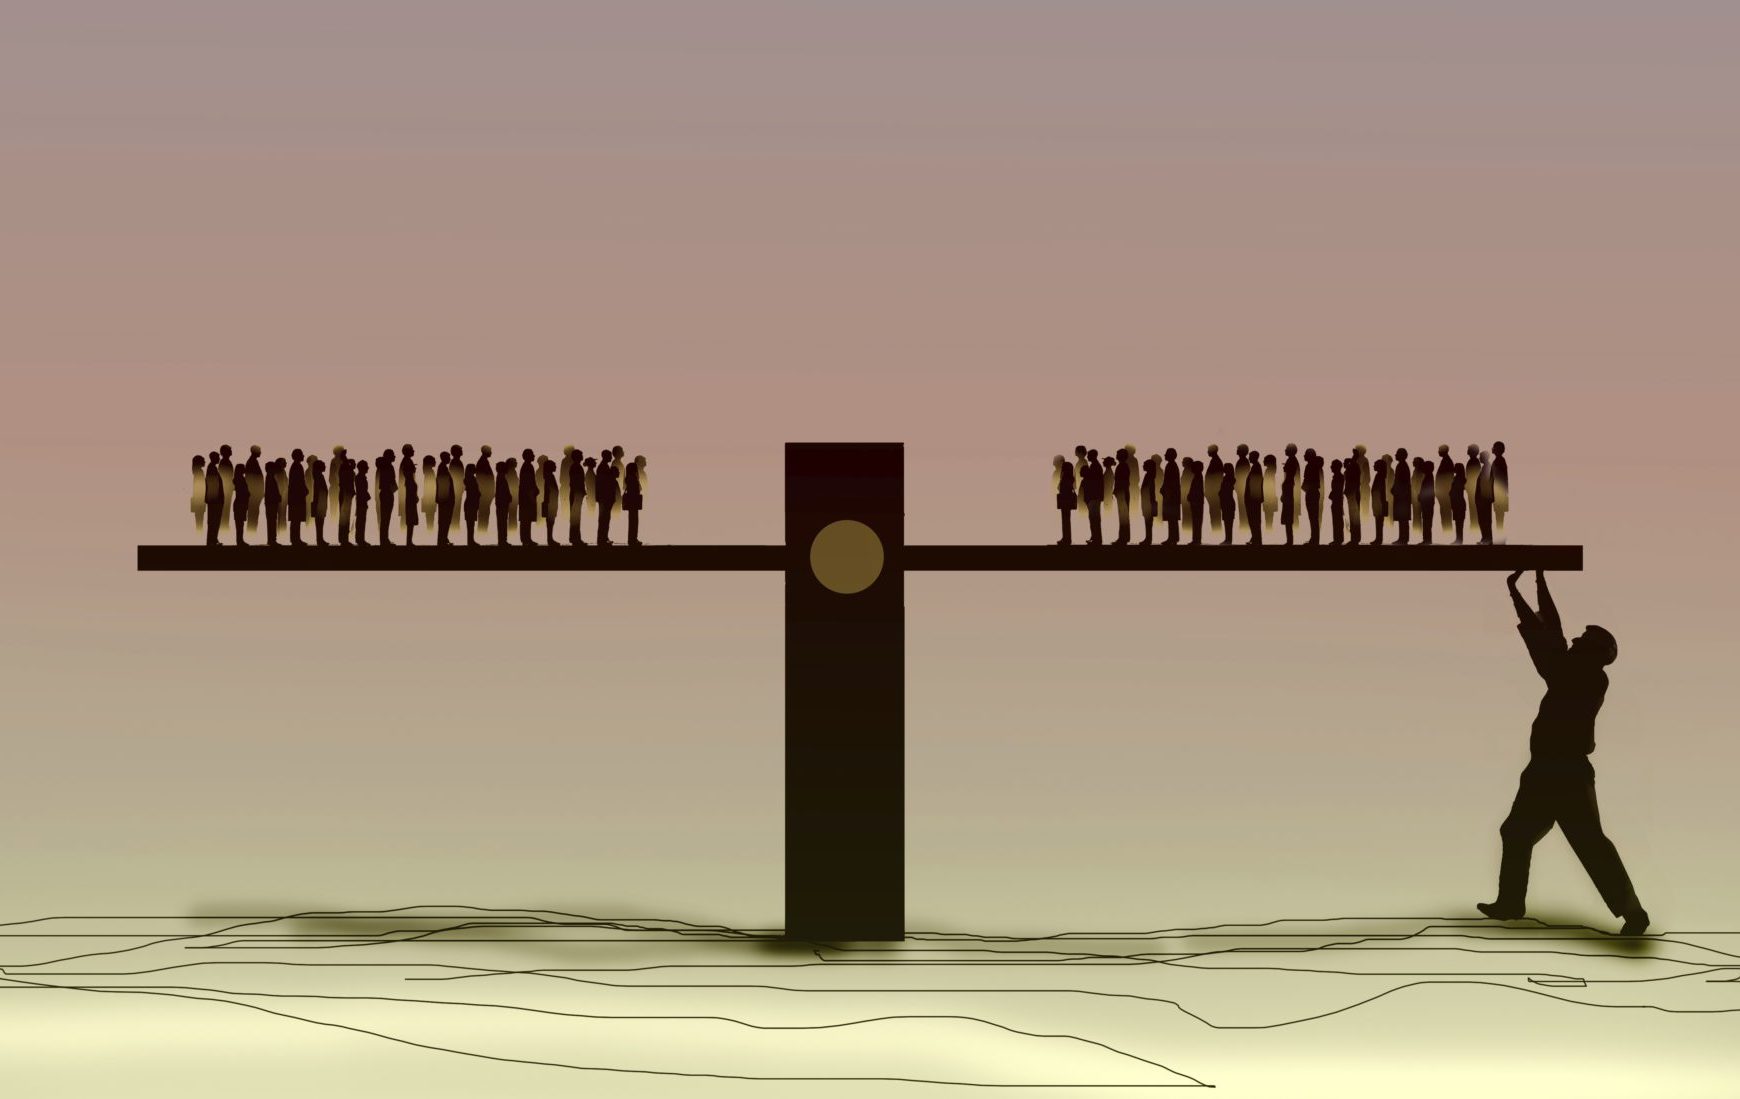 Inequality, conceptual illustration